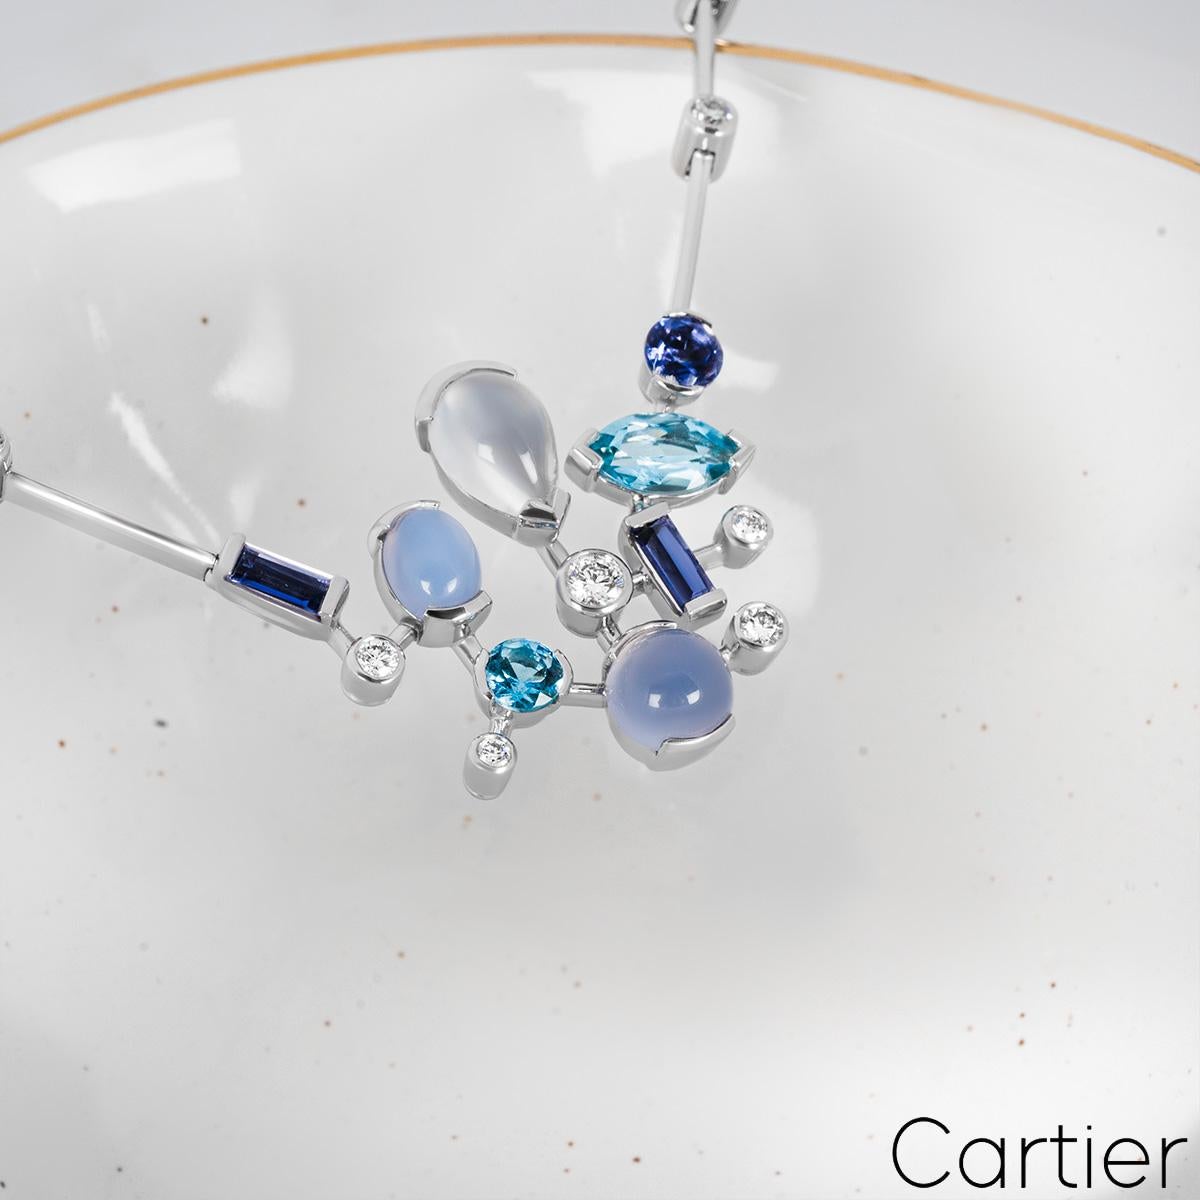 Marquise Cut Cartier Meli Melo Diamond and Mulit-Gem Choker Necklace